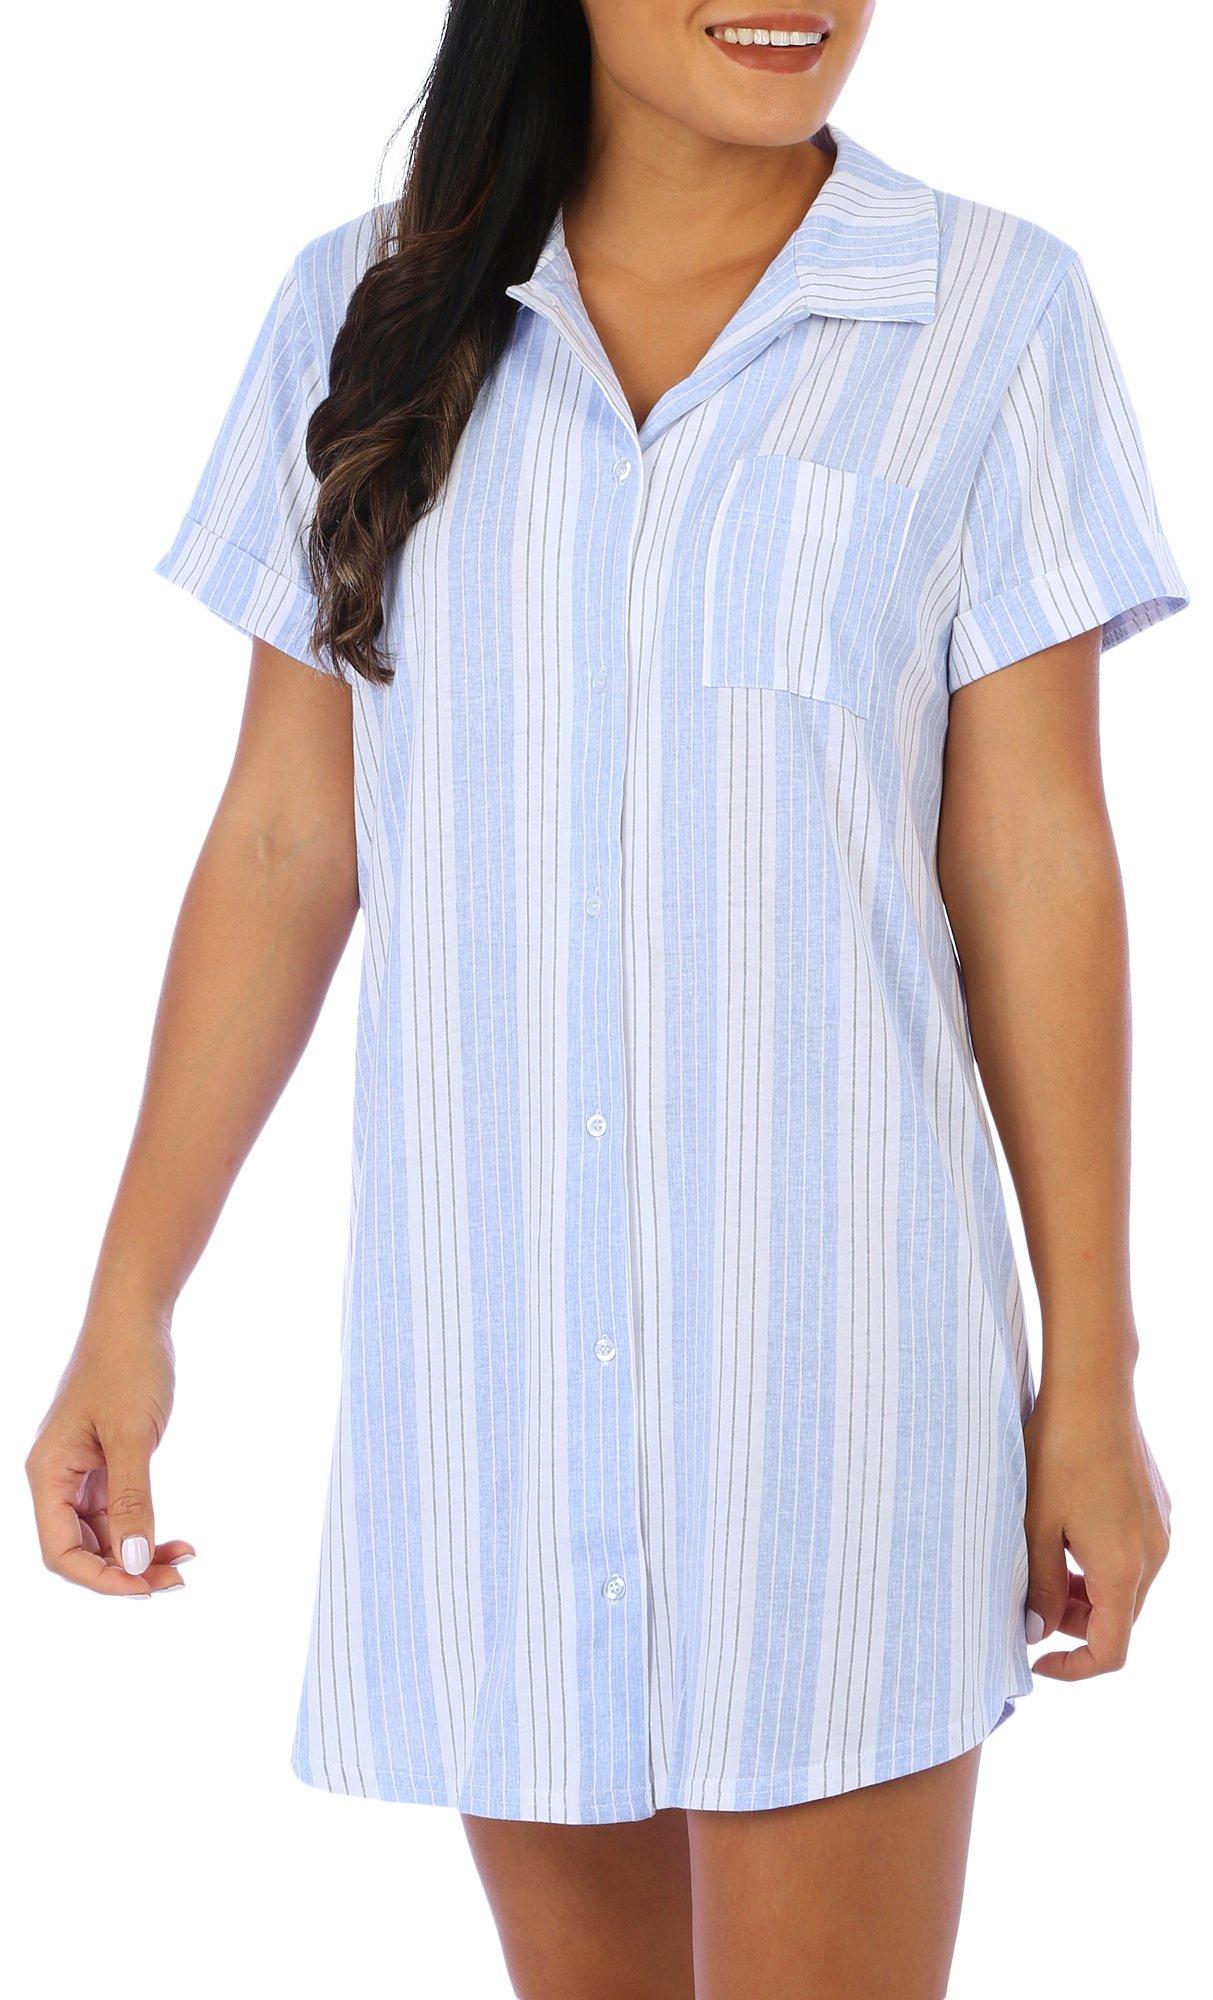 Laura Ashley Womens Stripe Short Sleeve Sleepshirt